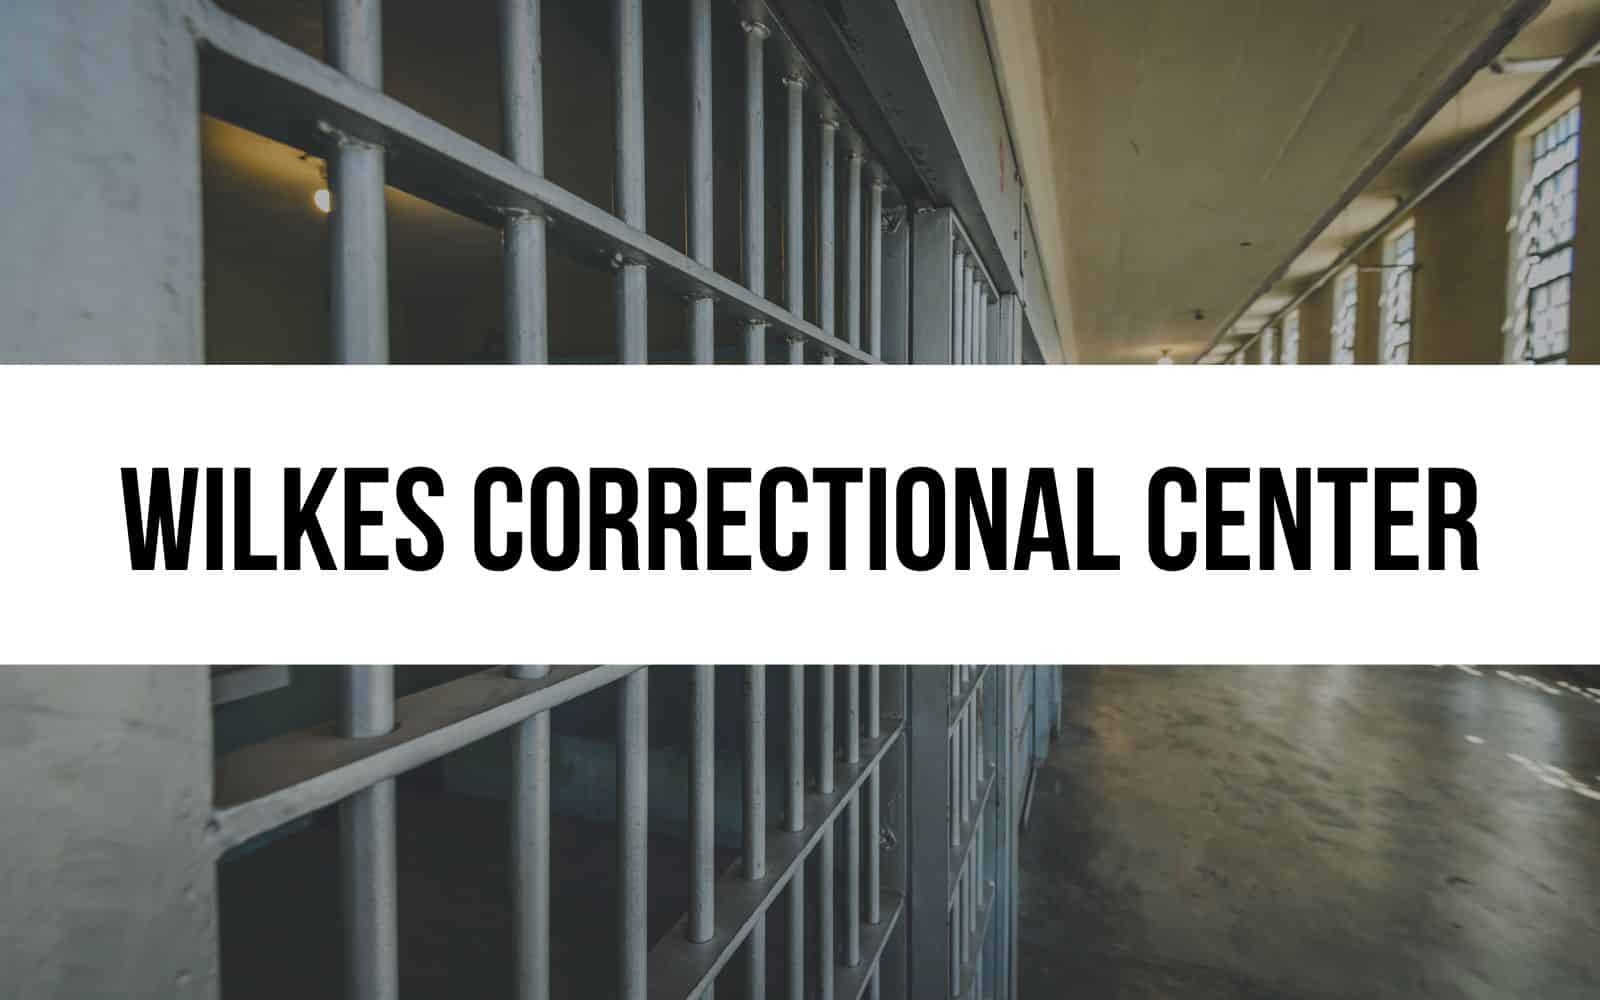 Wilkes Correctional Center